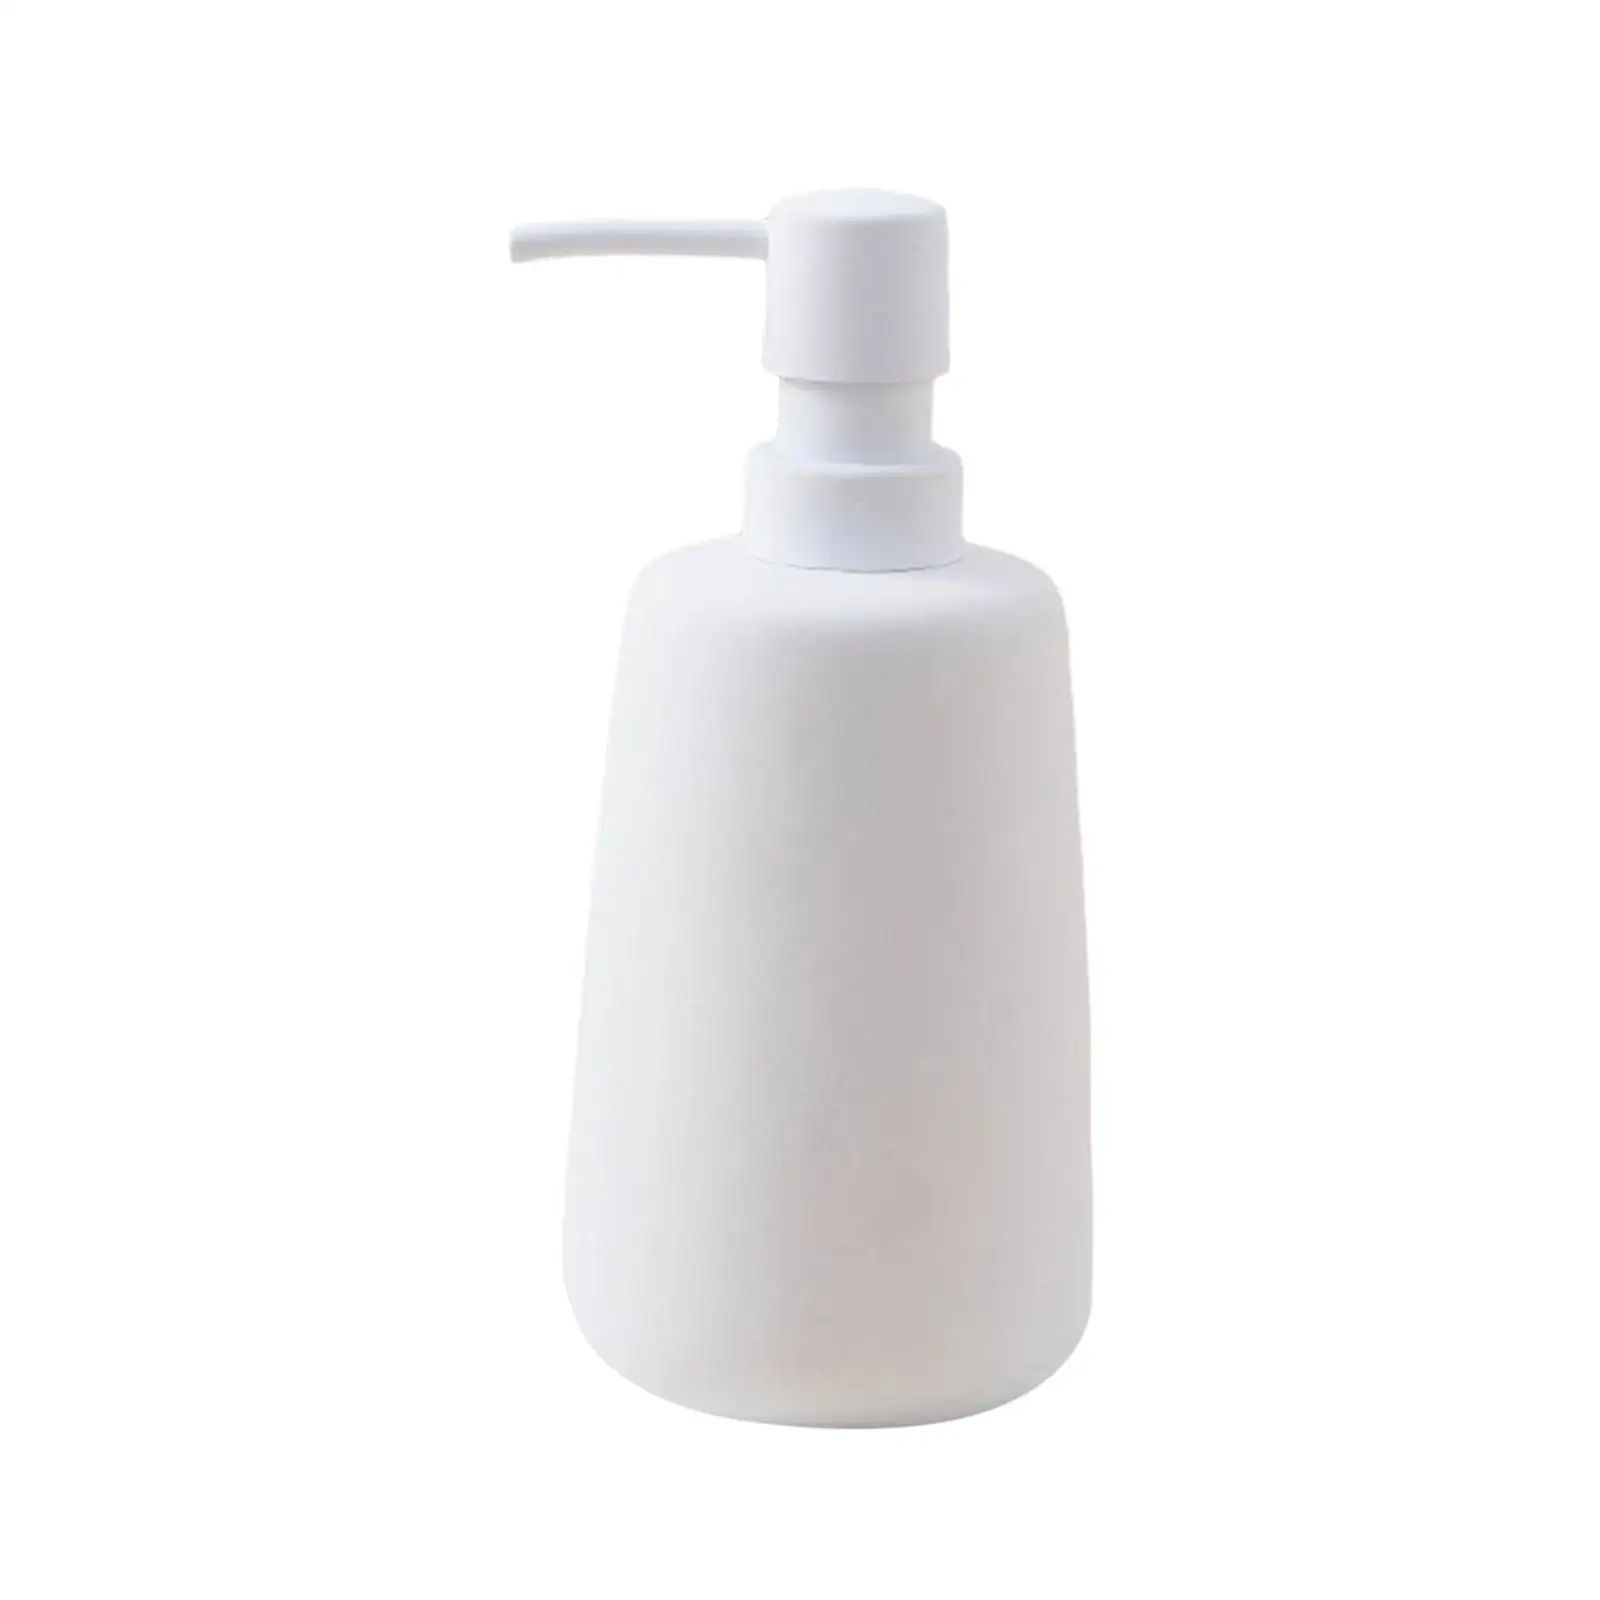 Soap Dispenser Ceramic Practical Bathroom Liquid Container Lotion Soap Dispenser for Hotel Laundry Countertop Bathroom